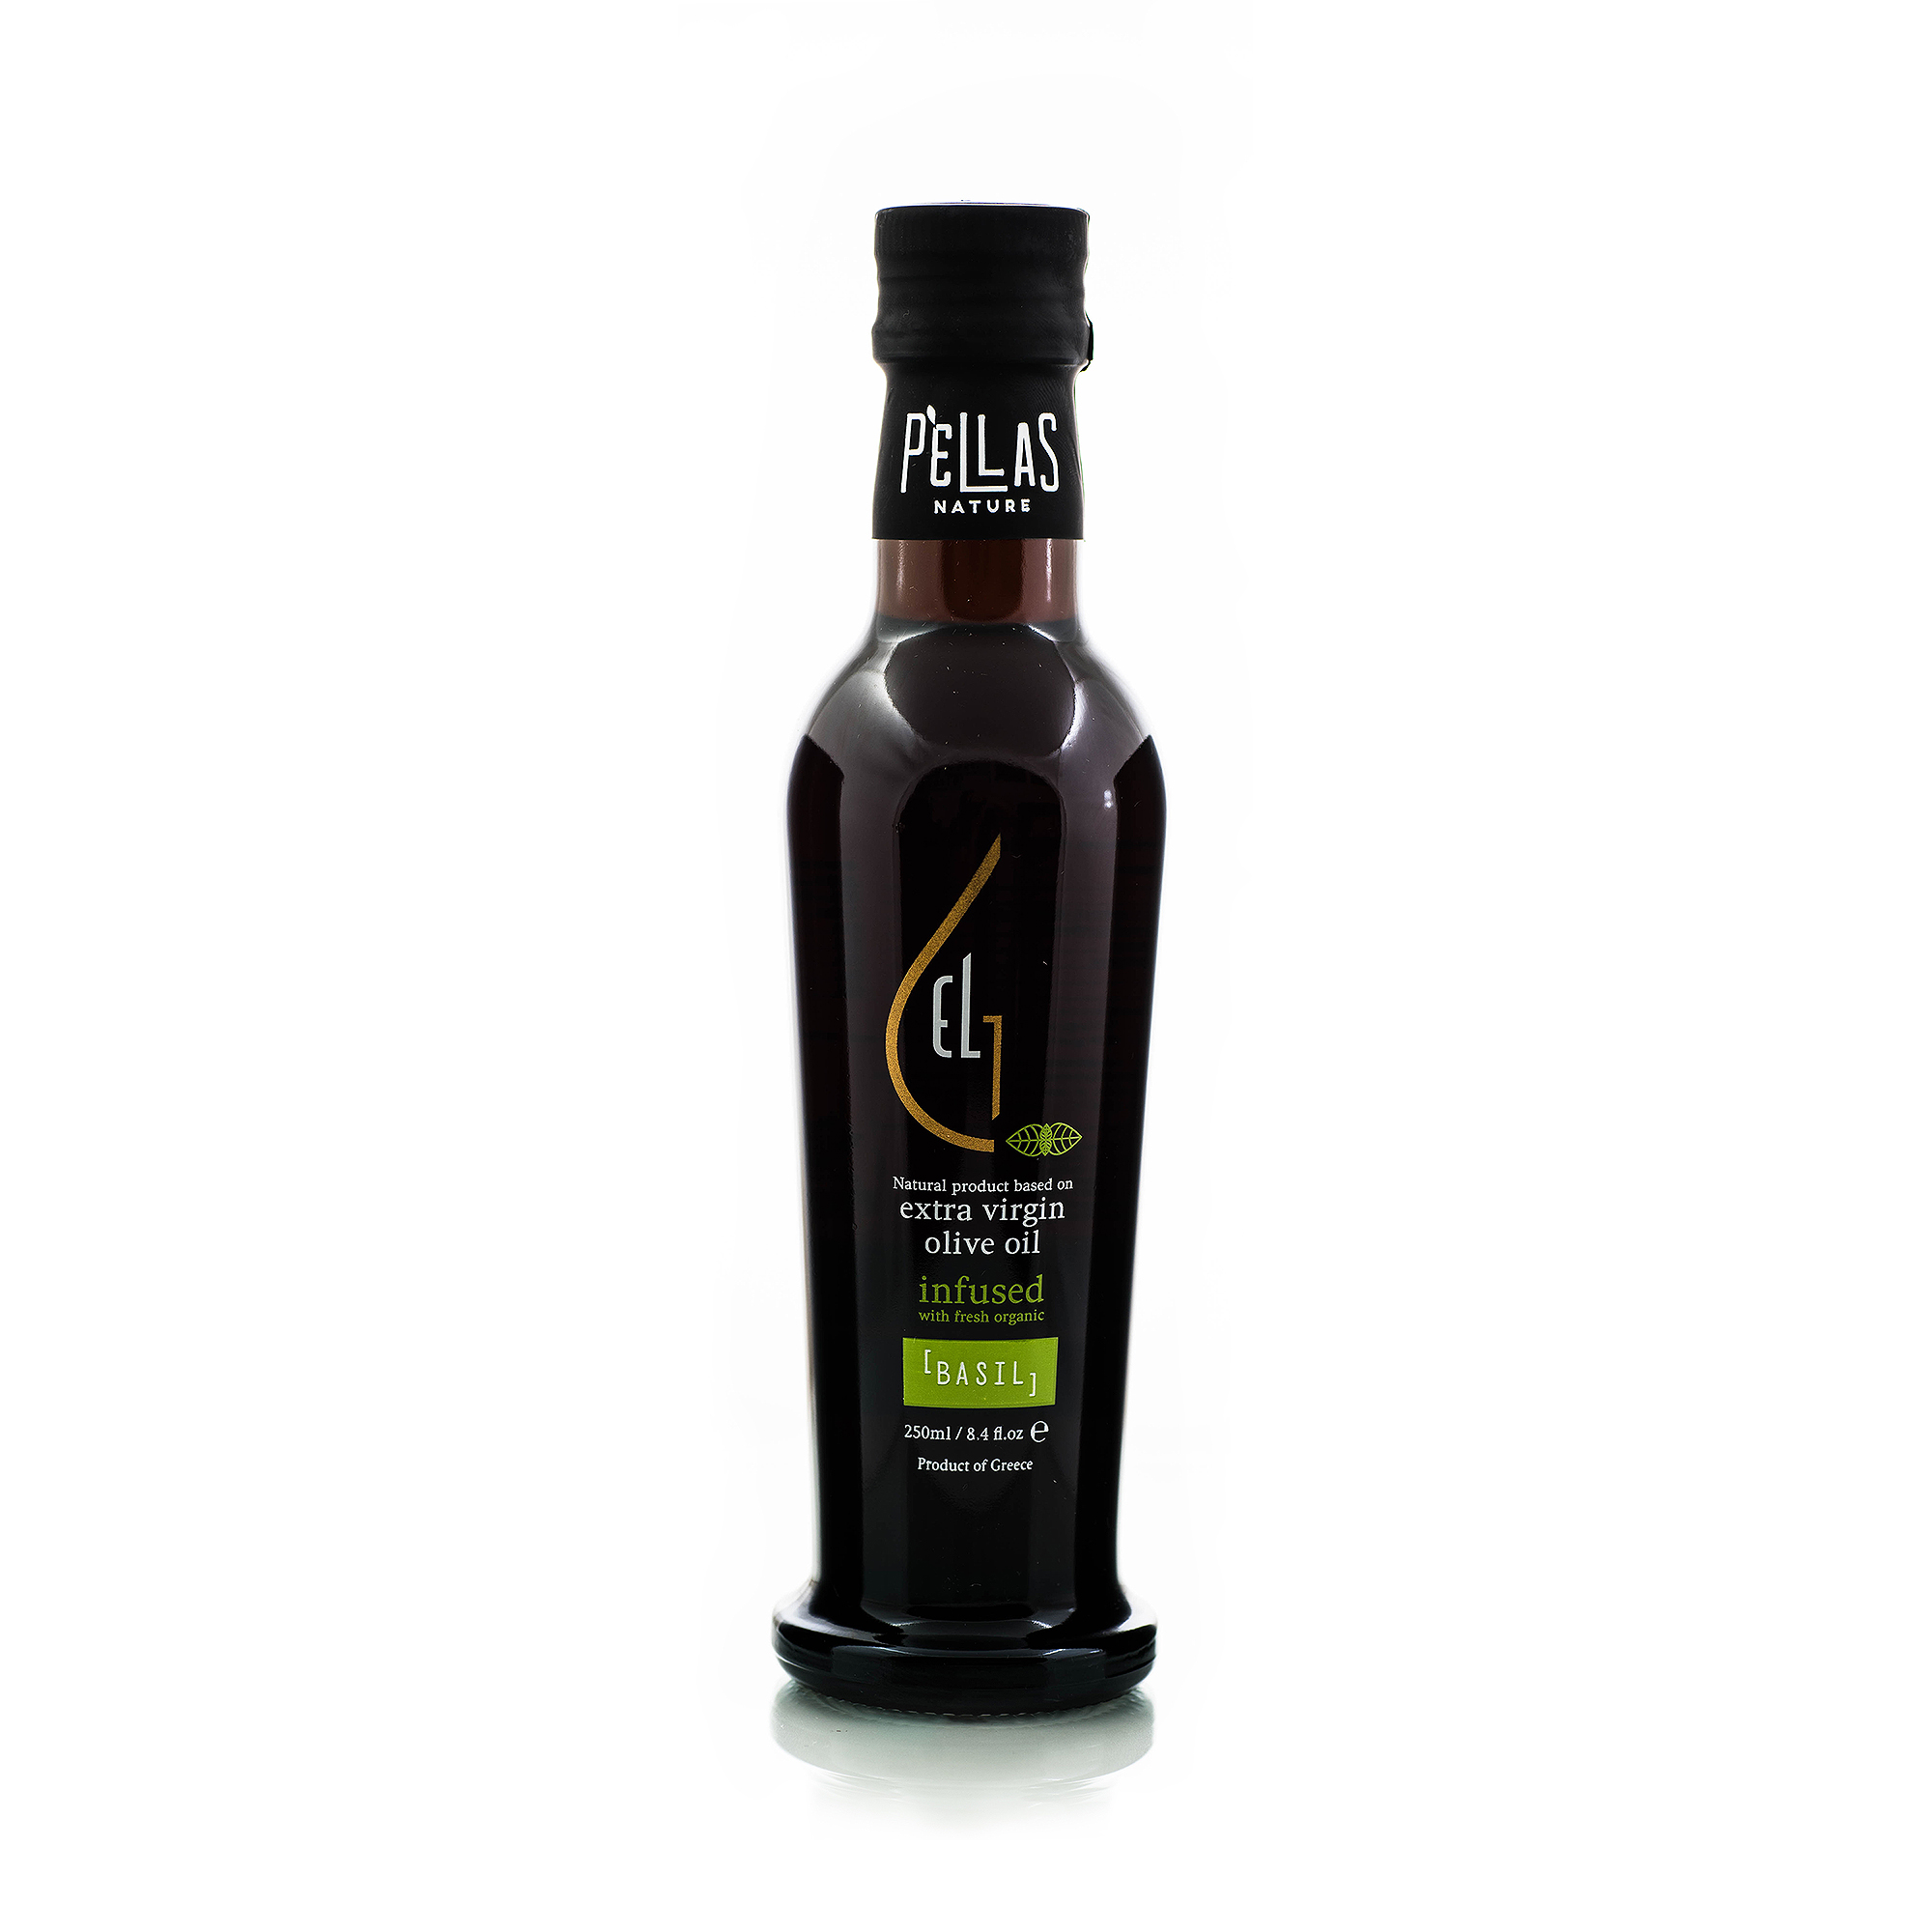 Pellas Nature Basil infused Olive Oil 8.45 oz Bottle